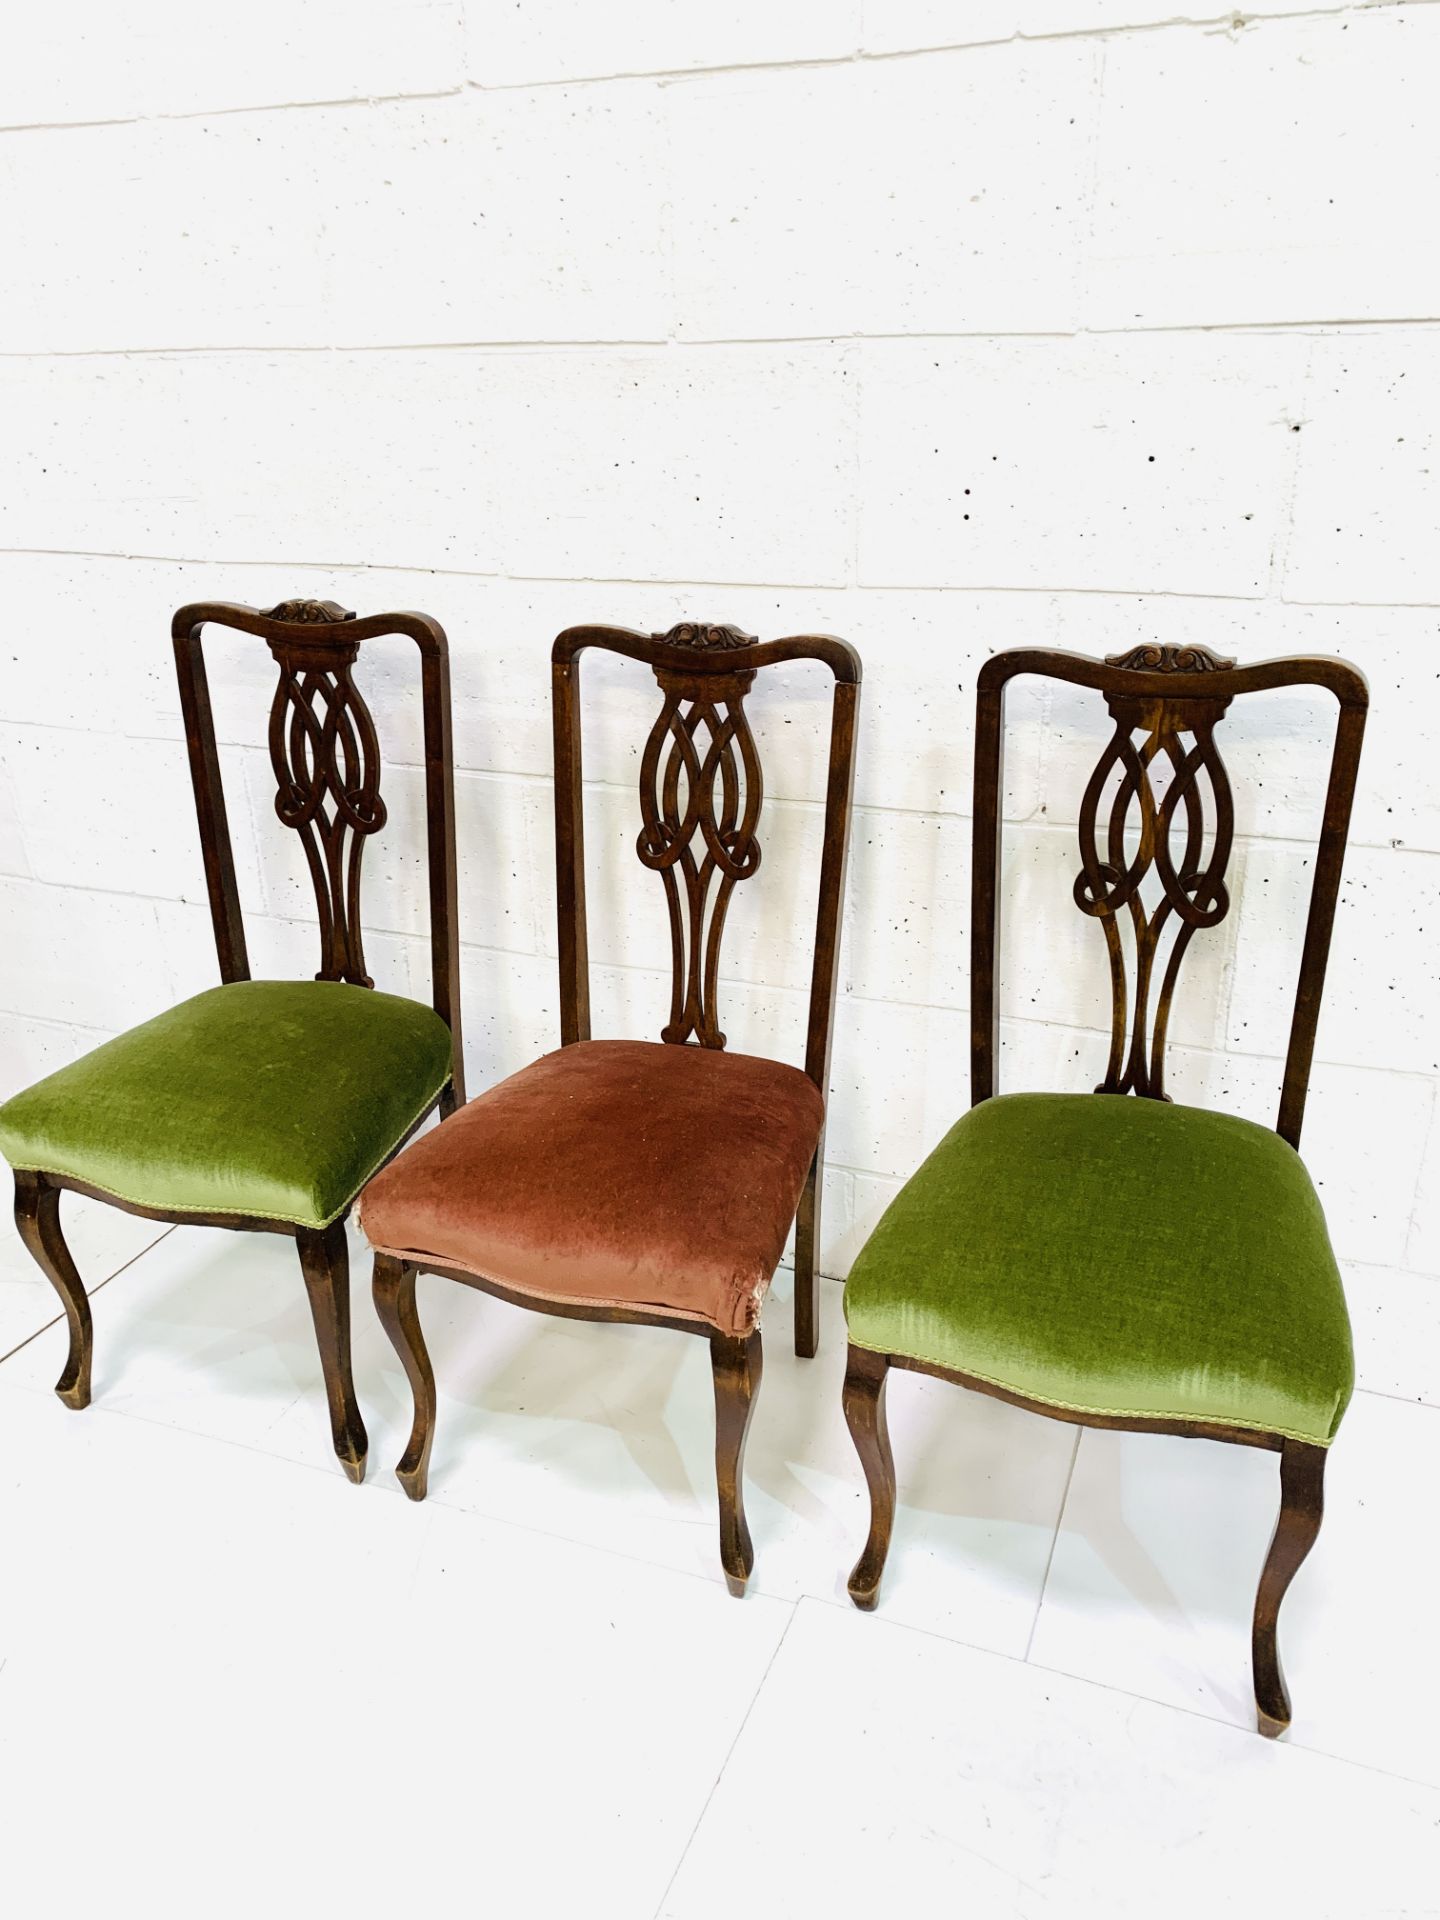 Three Georgian style mahogany dining chairs - Image 2 of 4